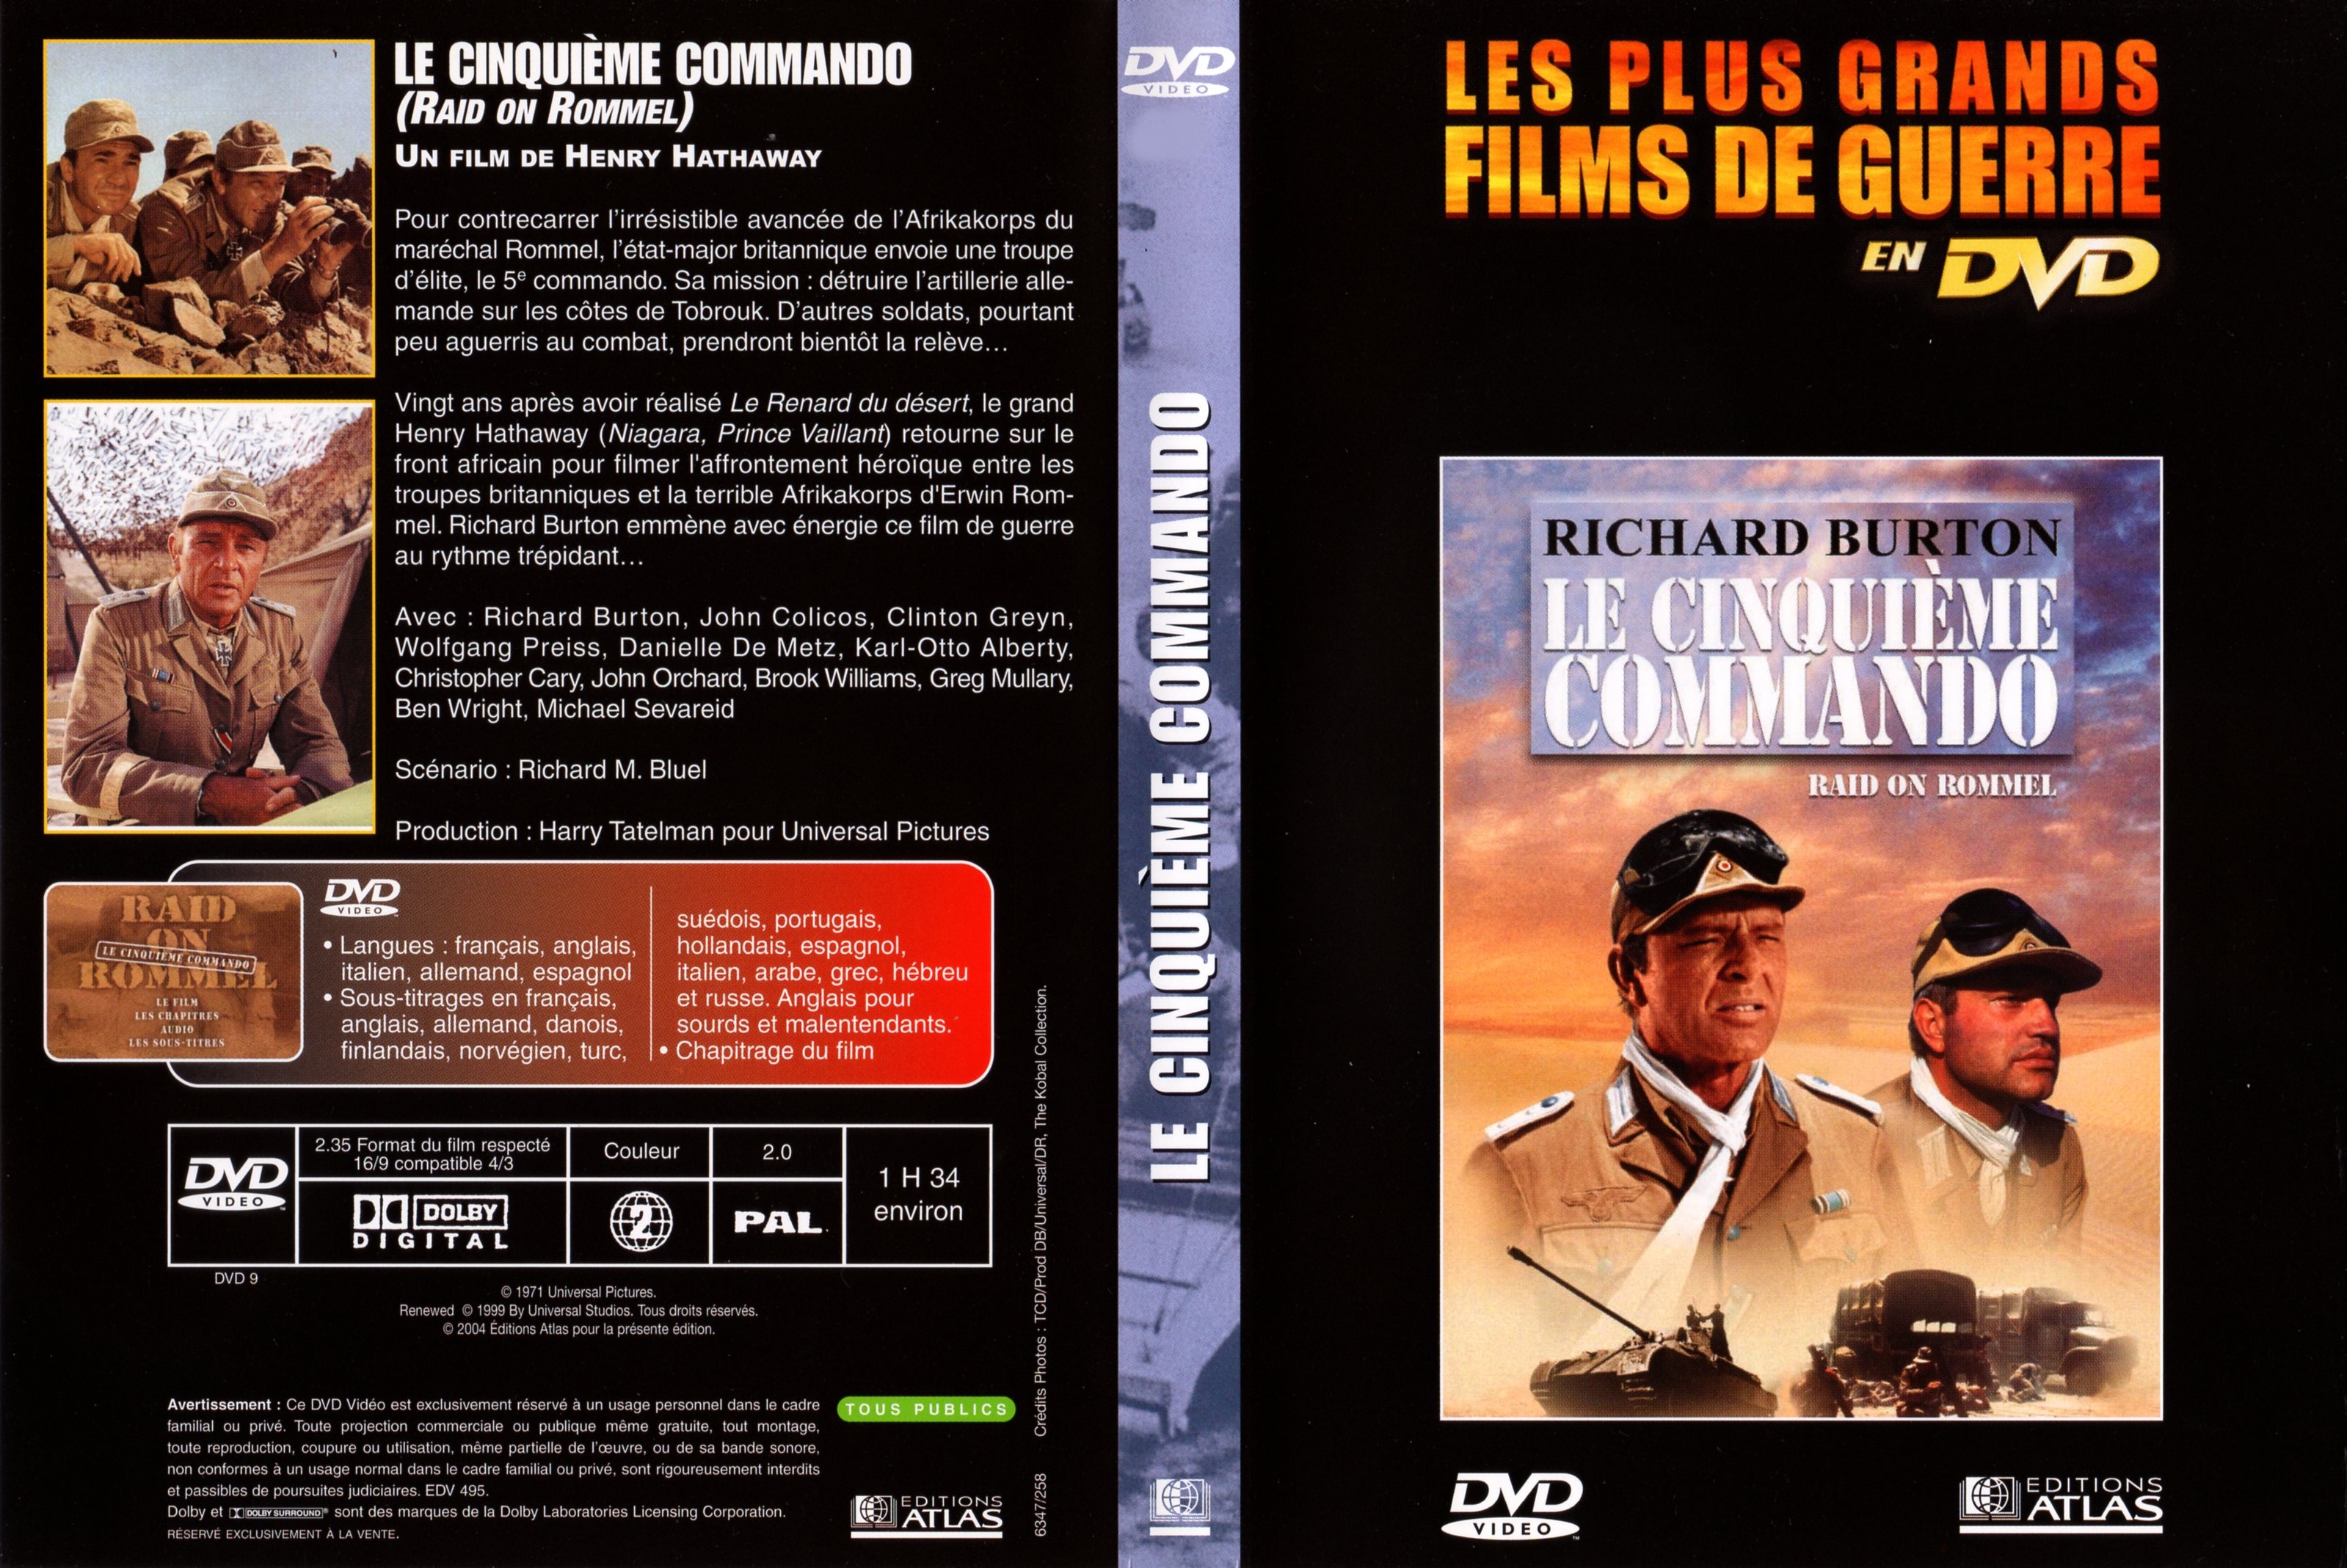 Jaquette DVD Le cinquime commando v3